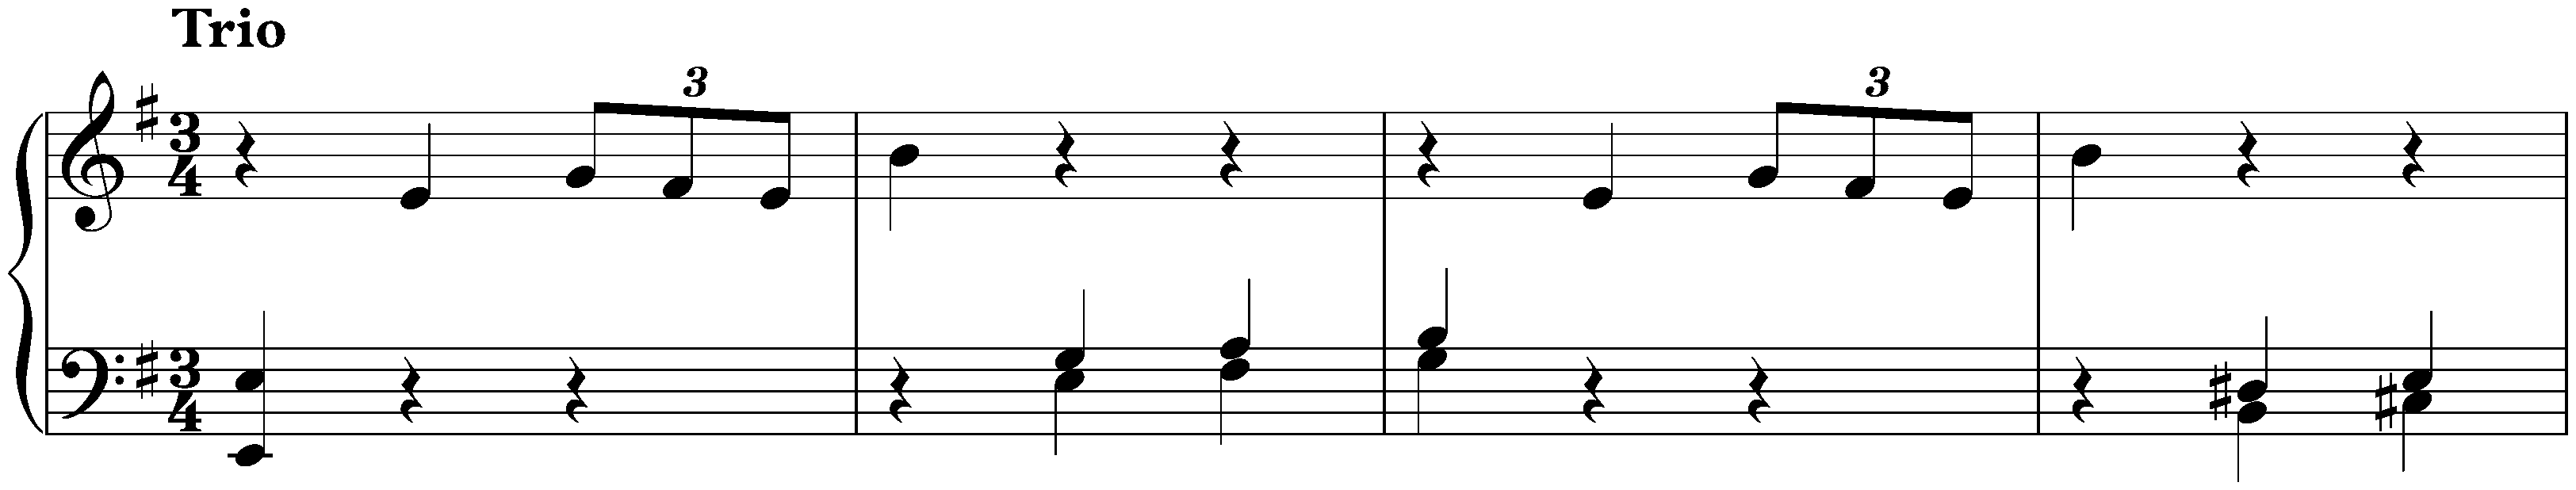 Sonata in G major, Hob. XVI:11; 3. Menuet – Trio